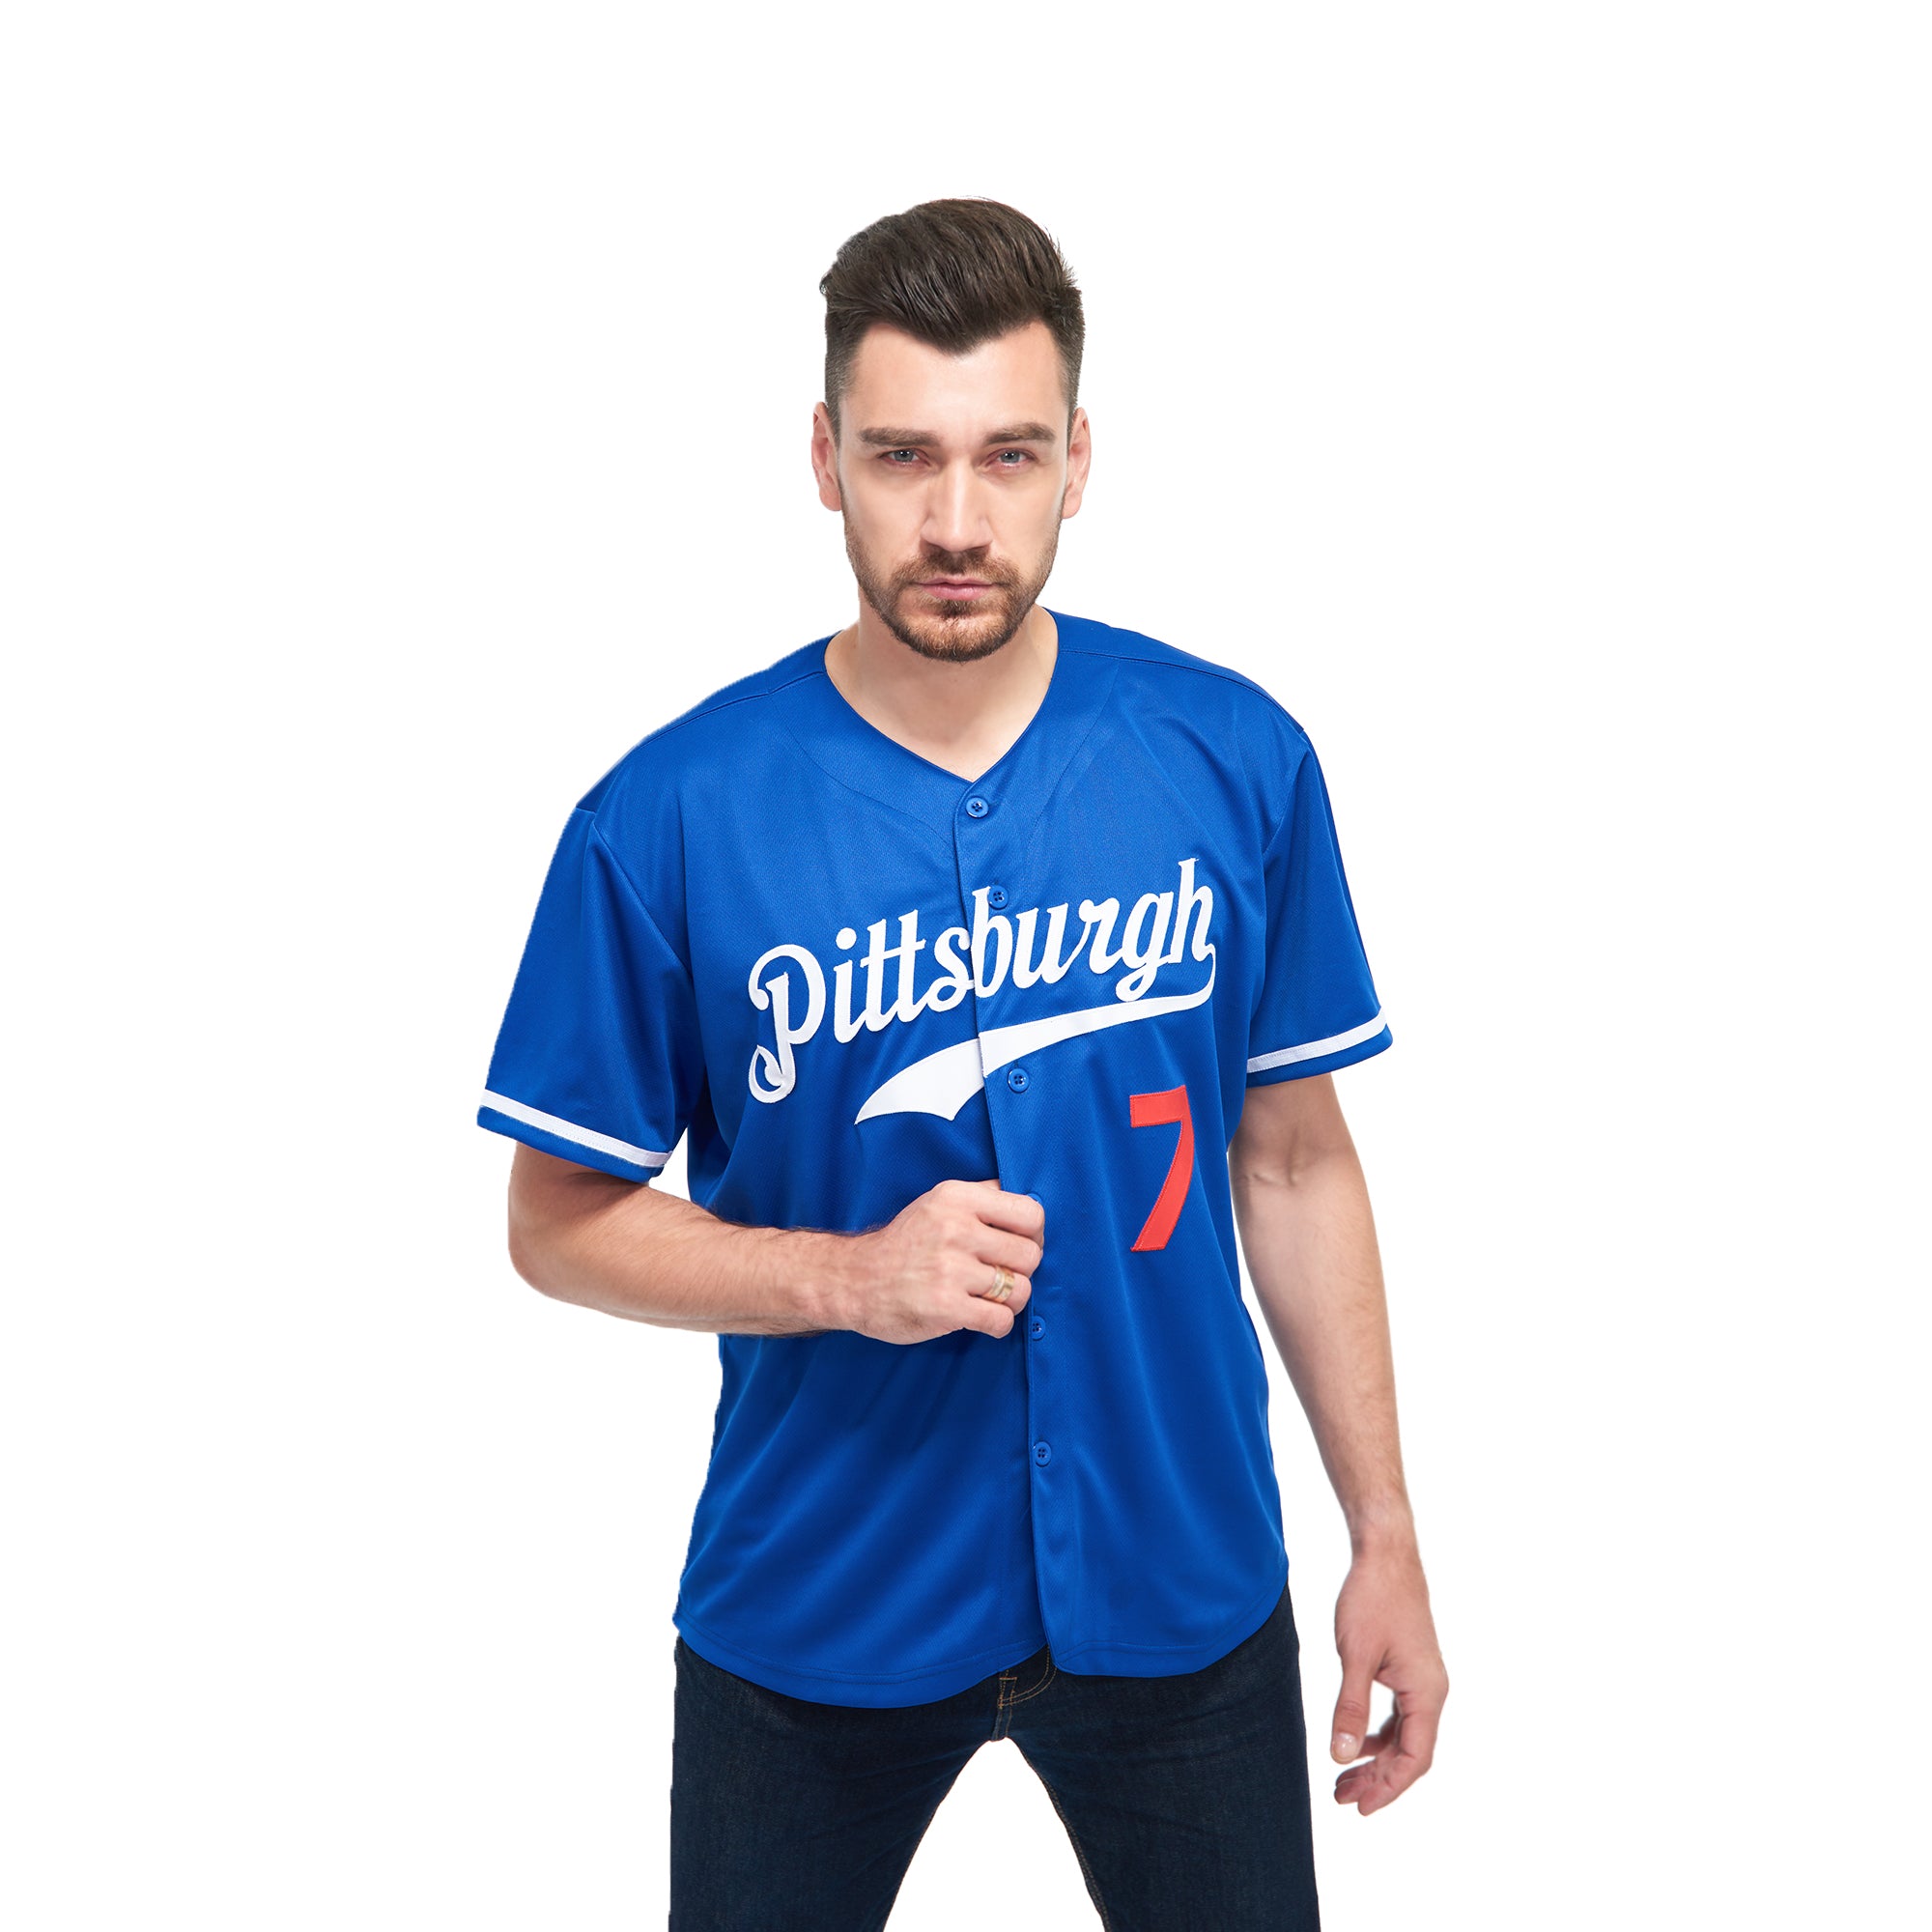  Custom Baseball Jerseys Graffiti Sports Button Shirt